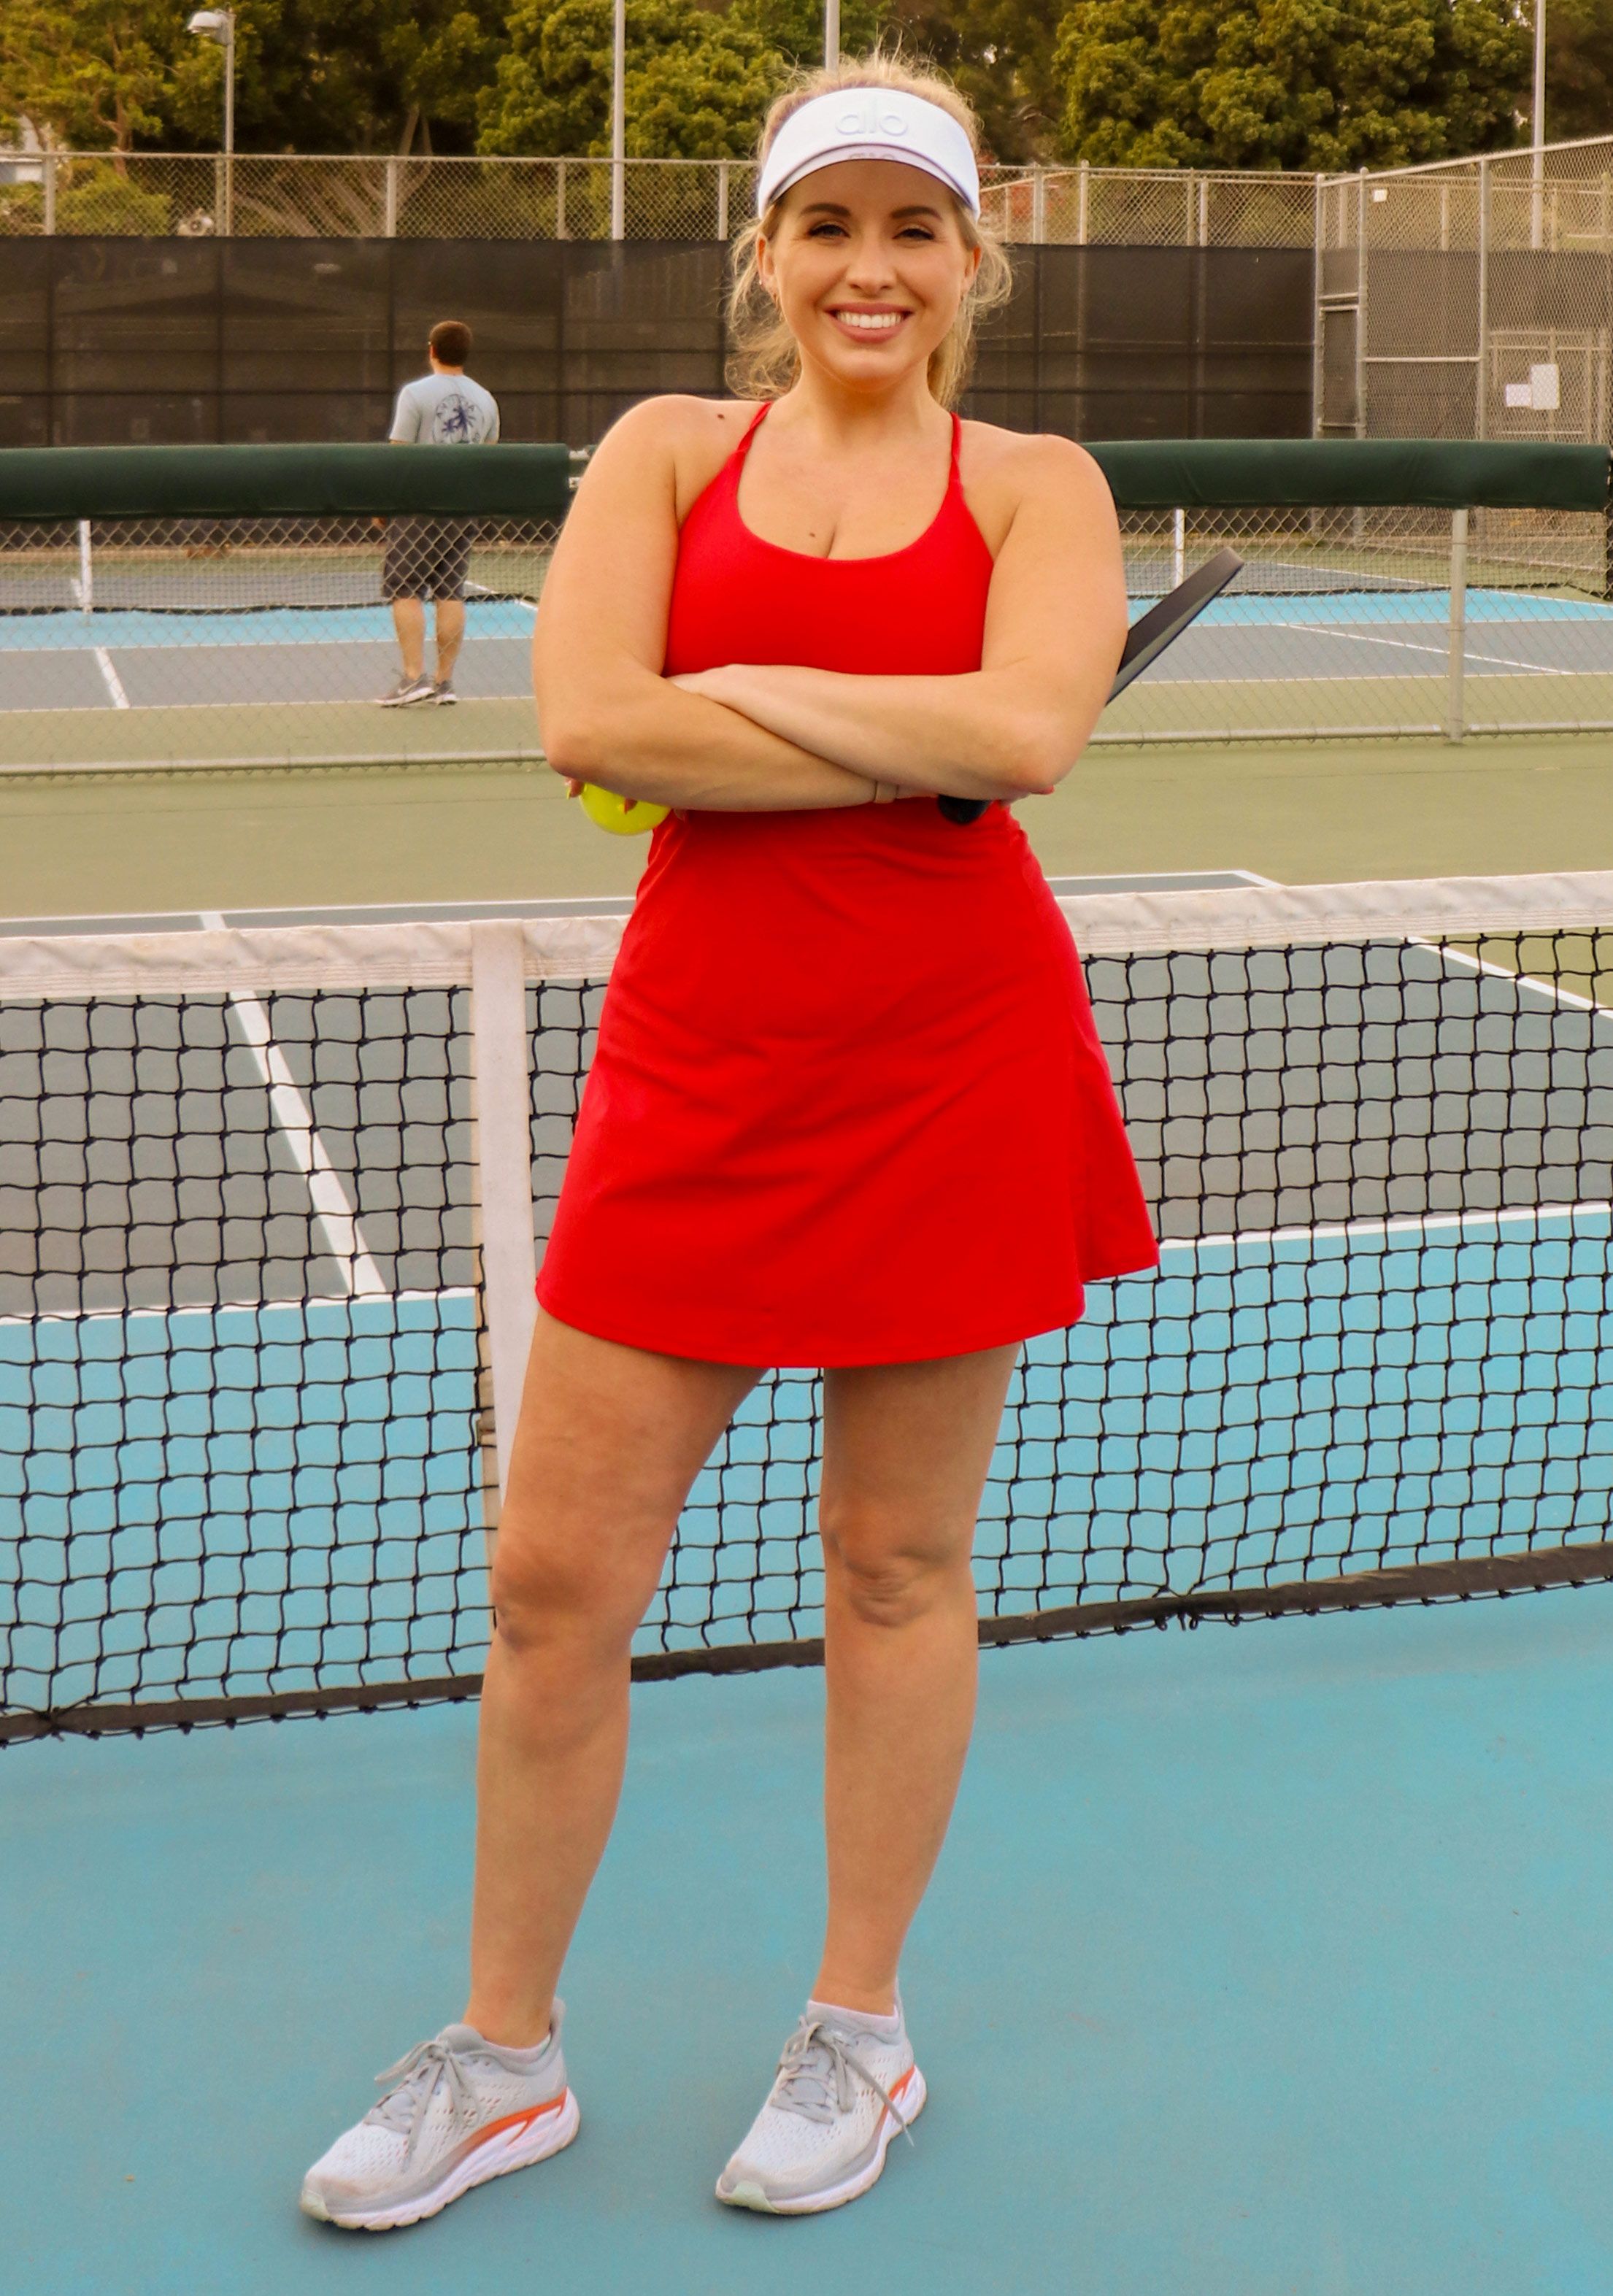 Woman Posing in Pickleball Sports Attire